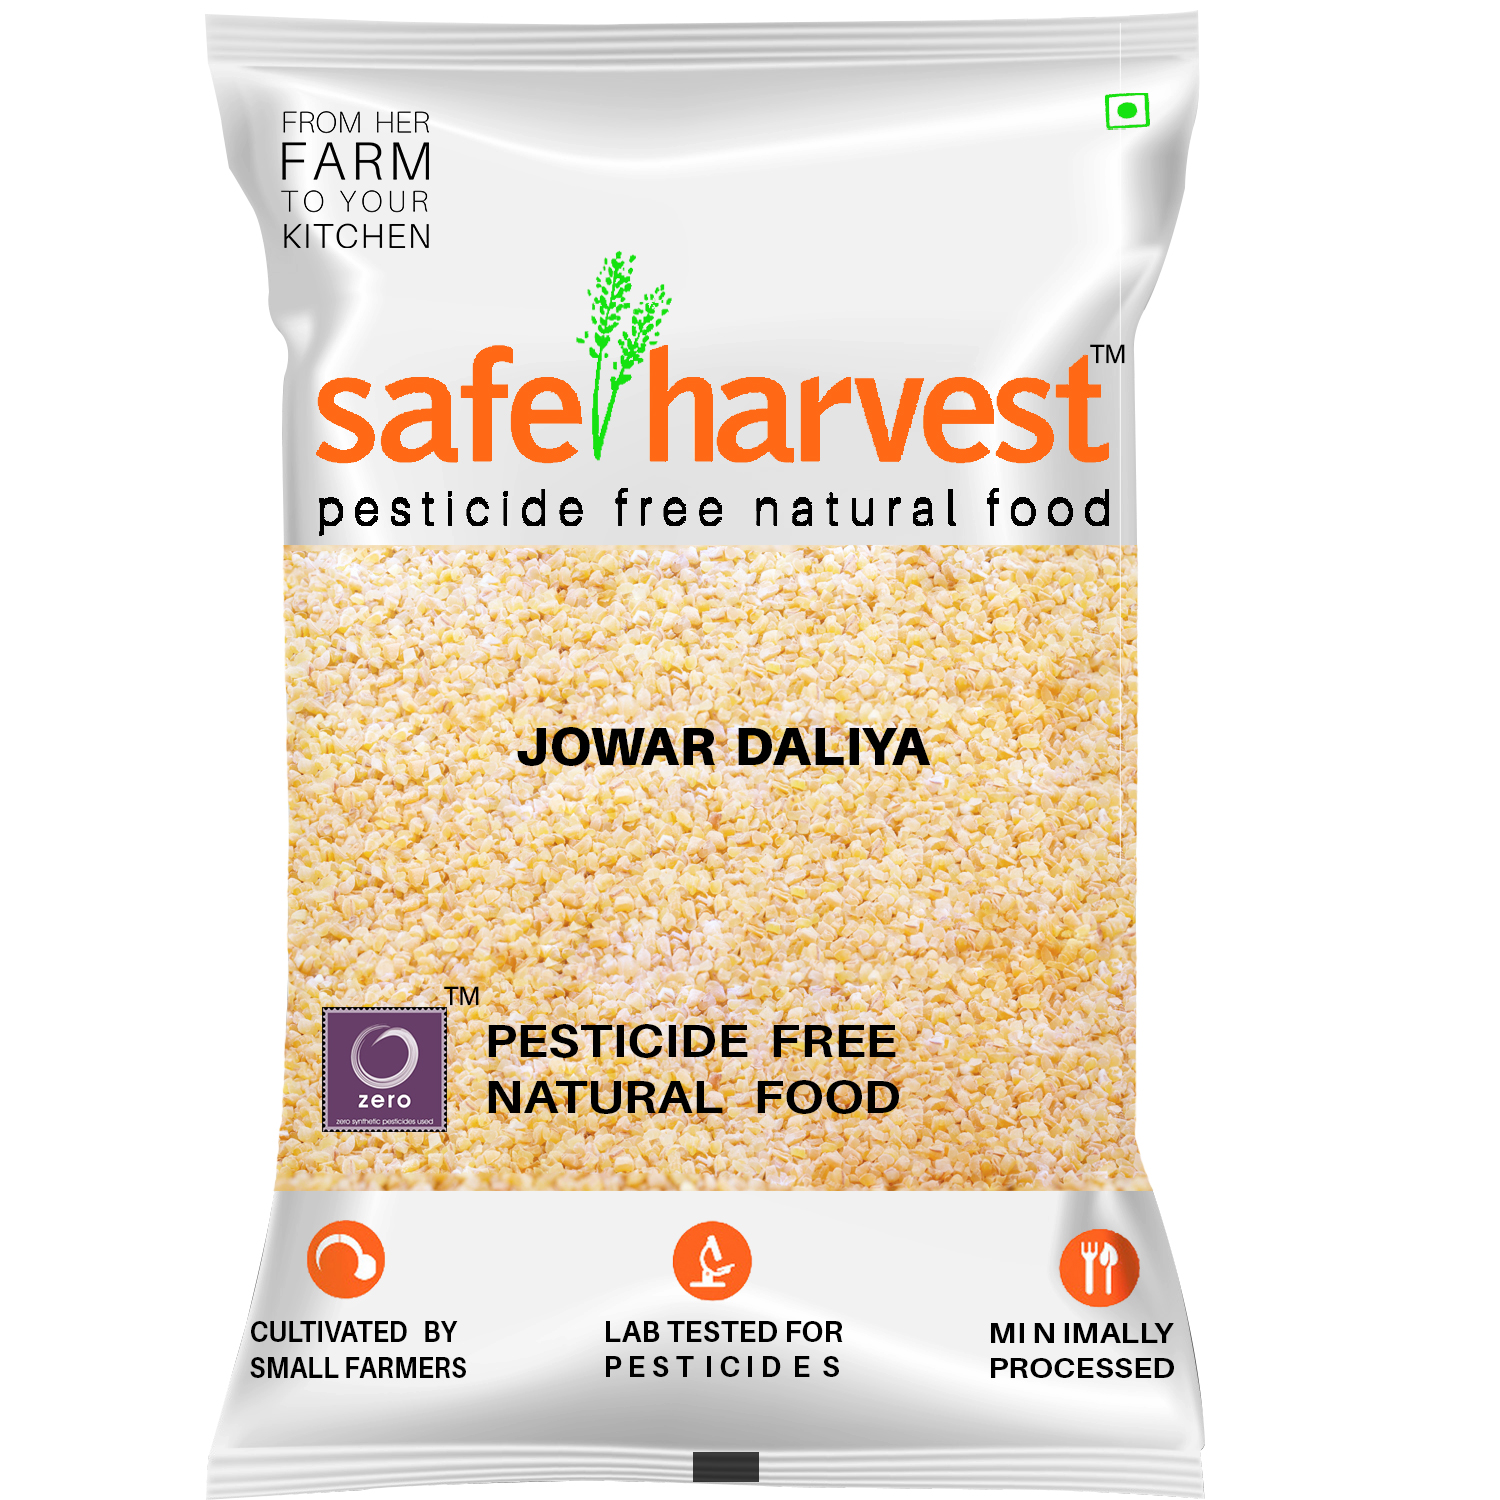 Safe Harvest Jower daliya 500g